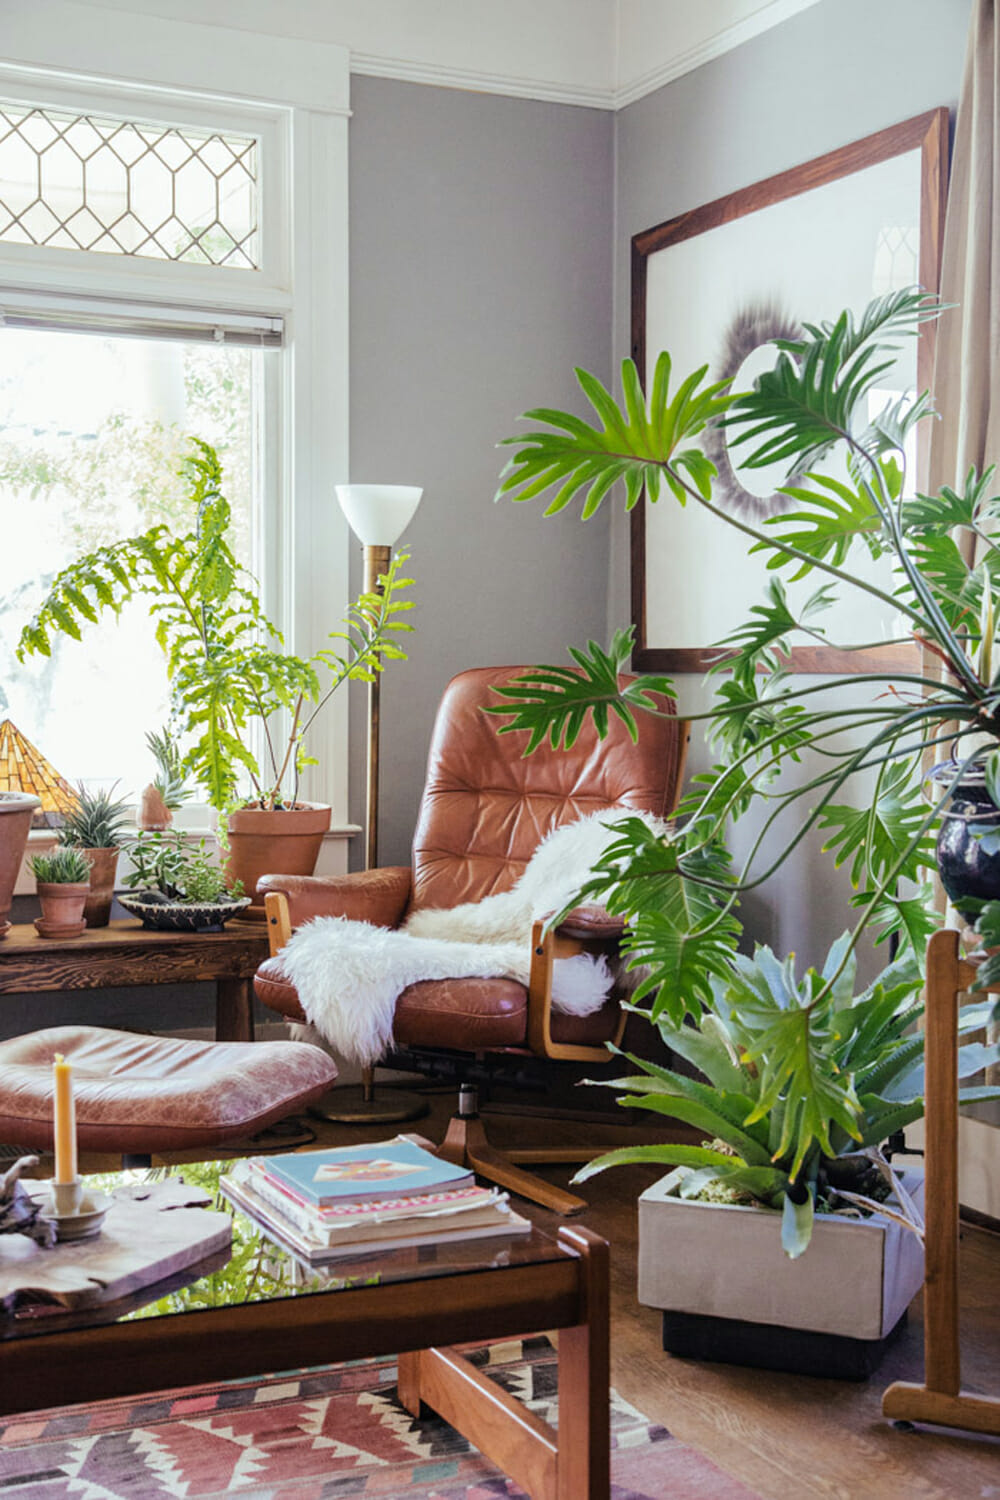 Decorating with Plants - Modernize